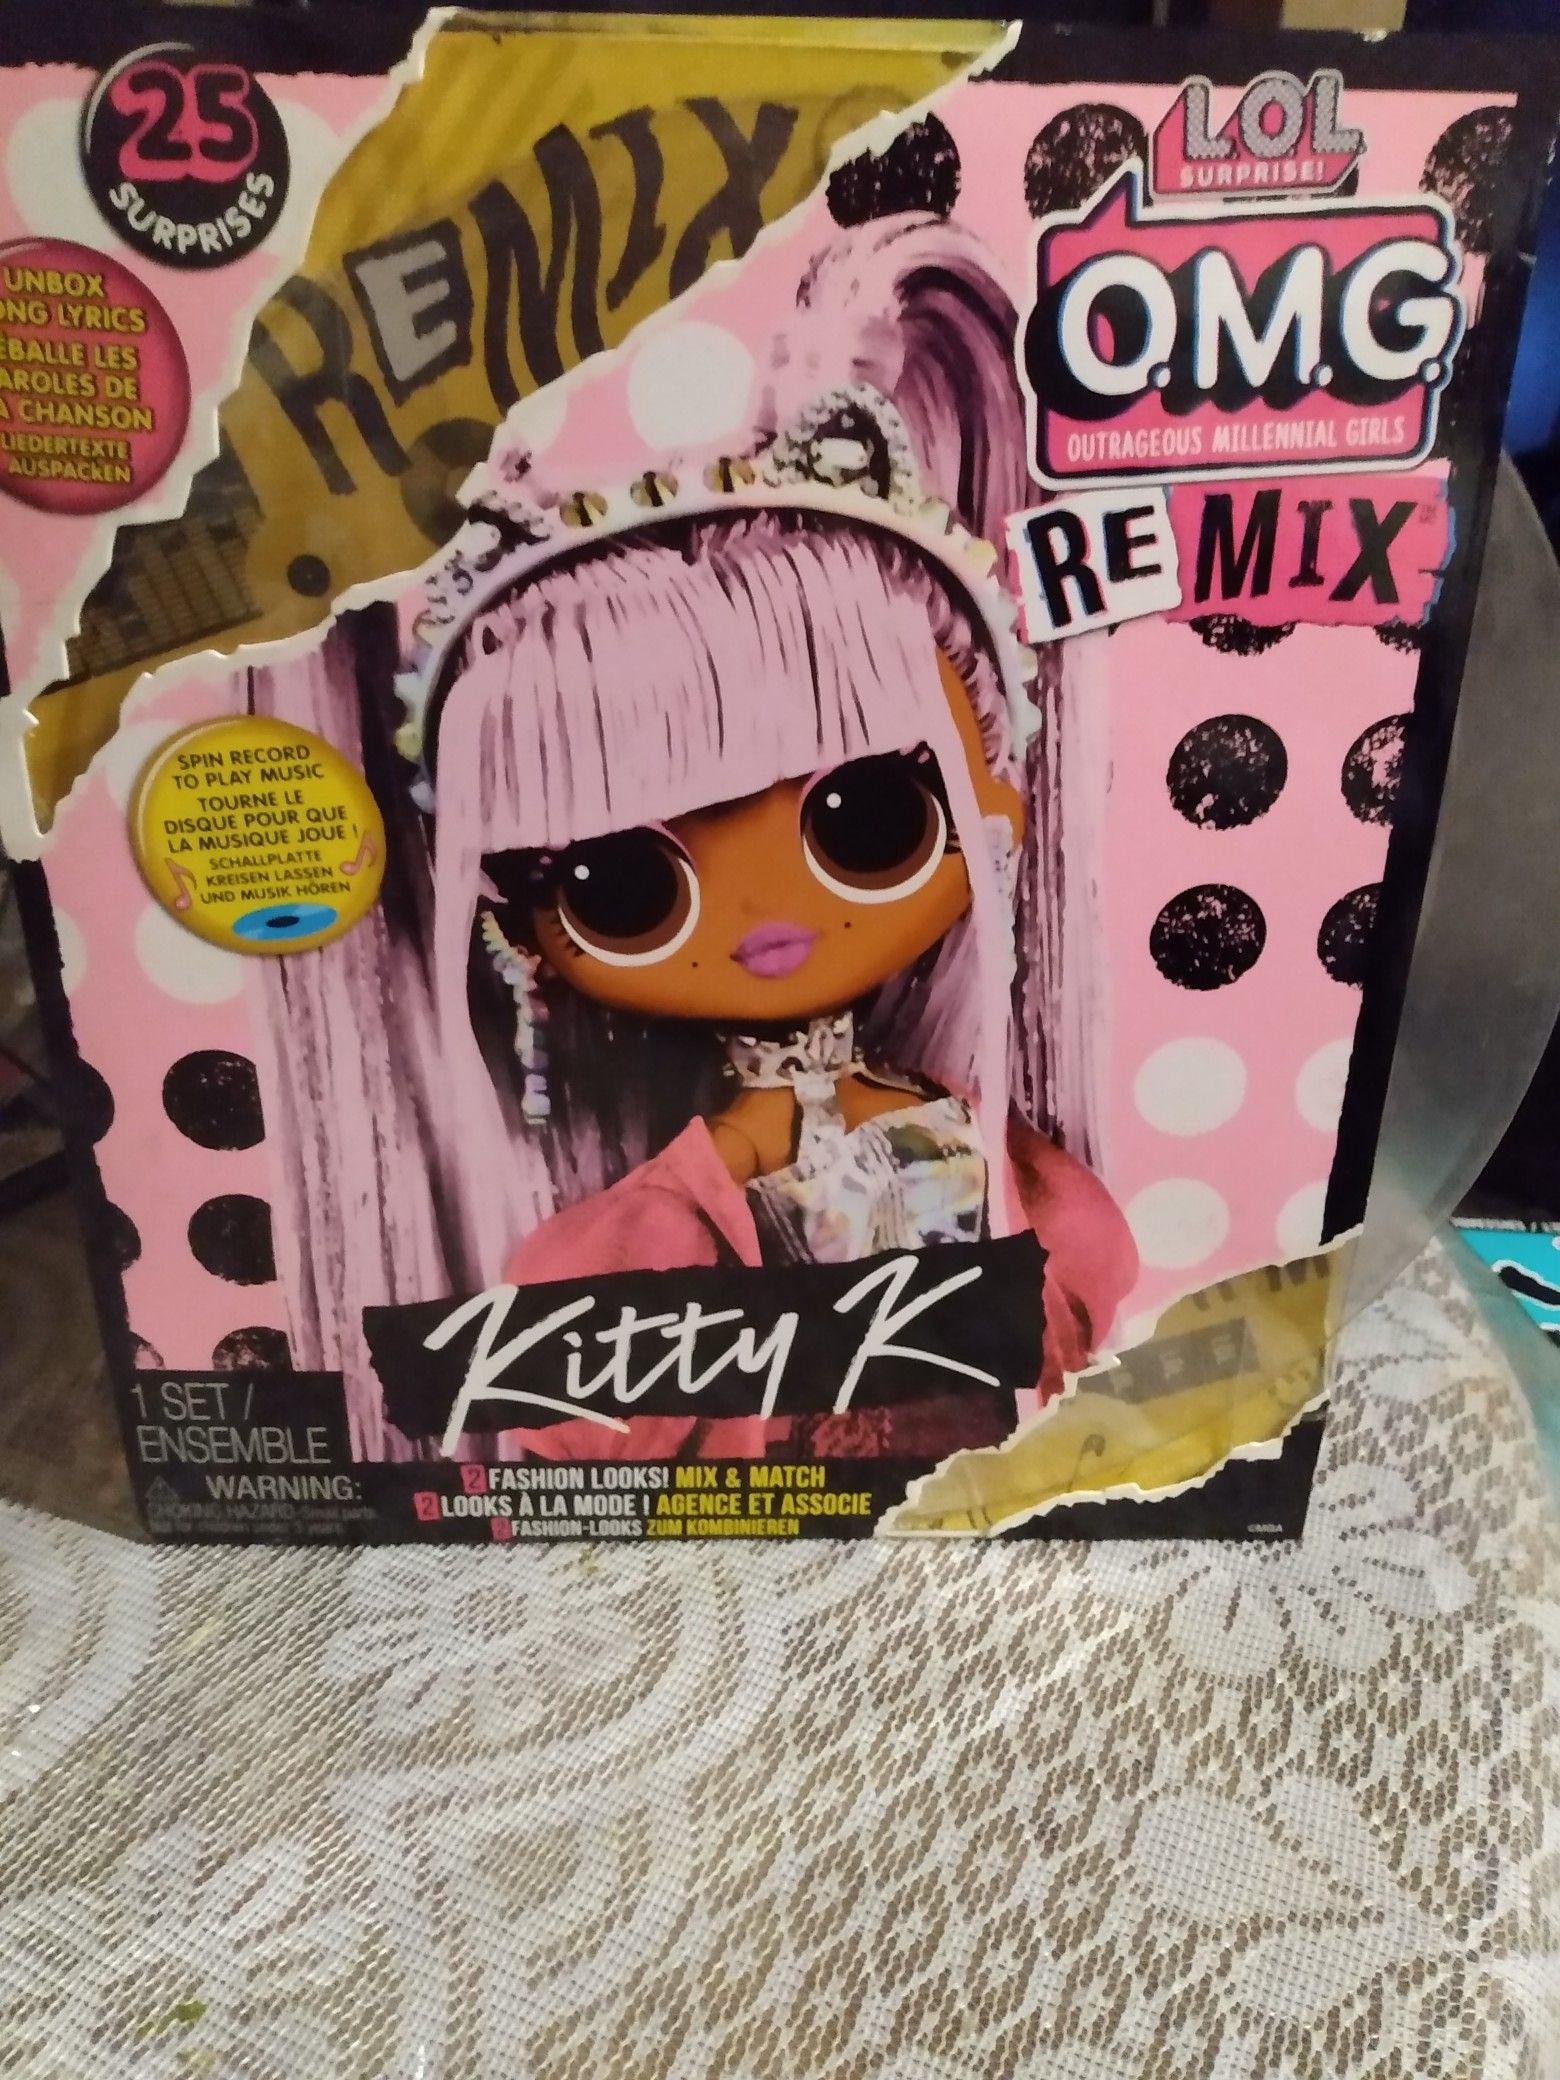 OMG remix Kitty K